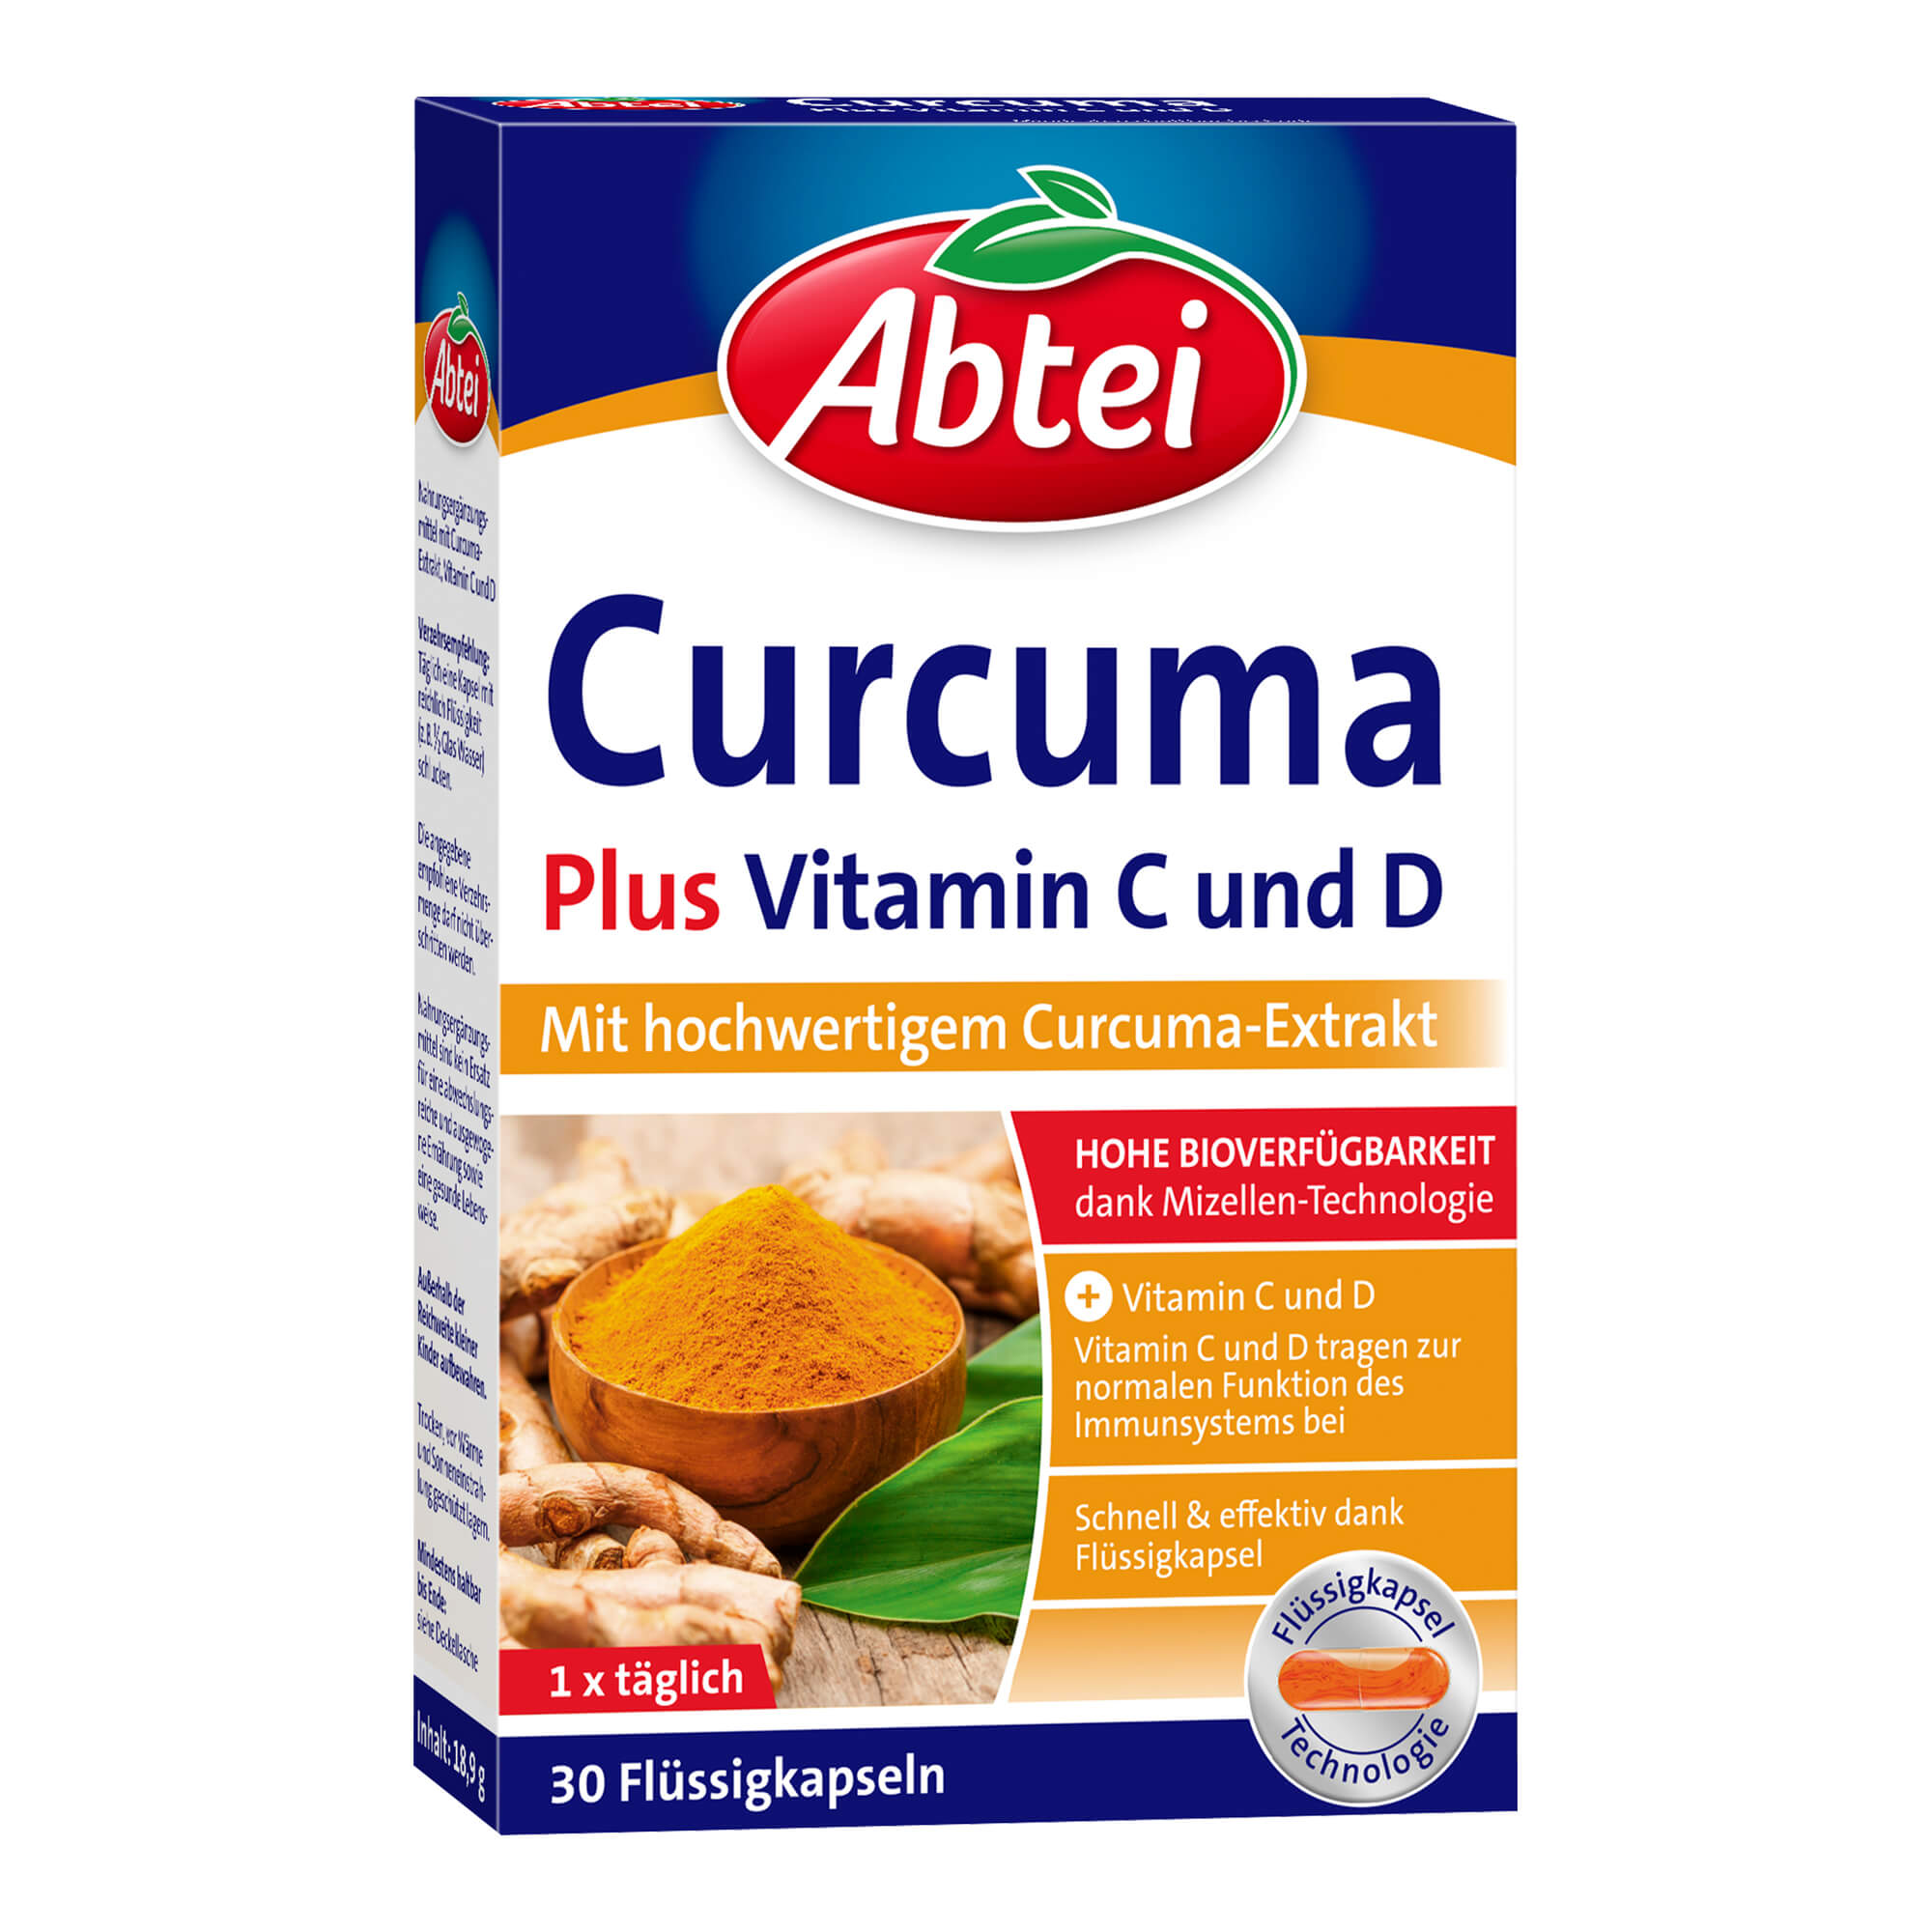 Nahrungsergänzungsmittel mit Kurkuma-Extrakt, Vitamin C und D.